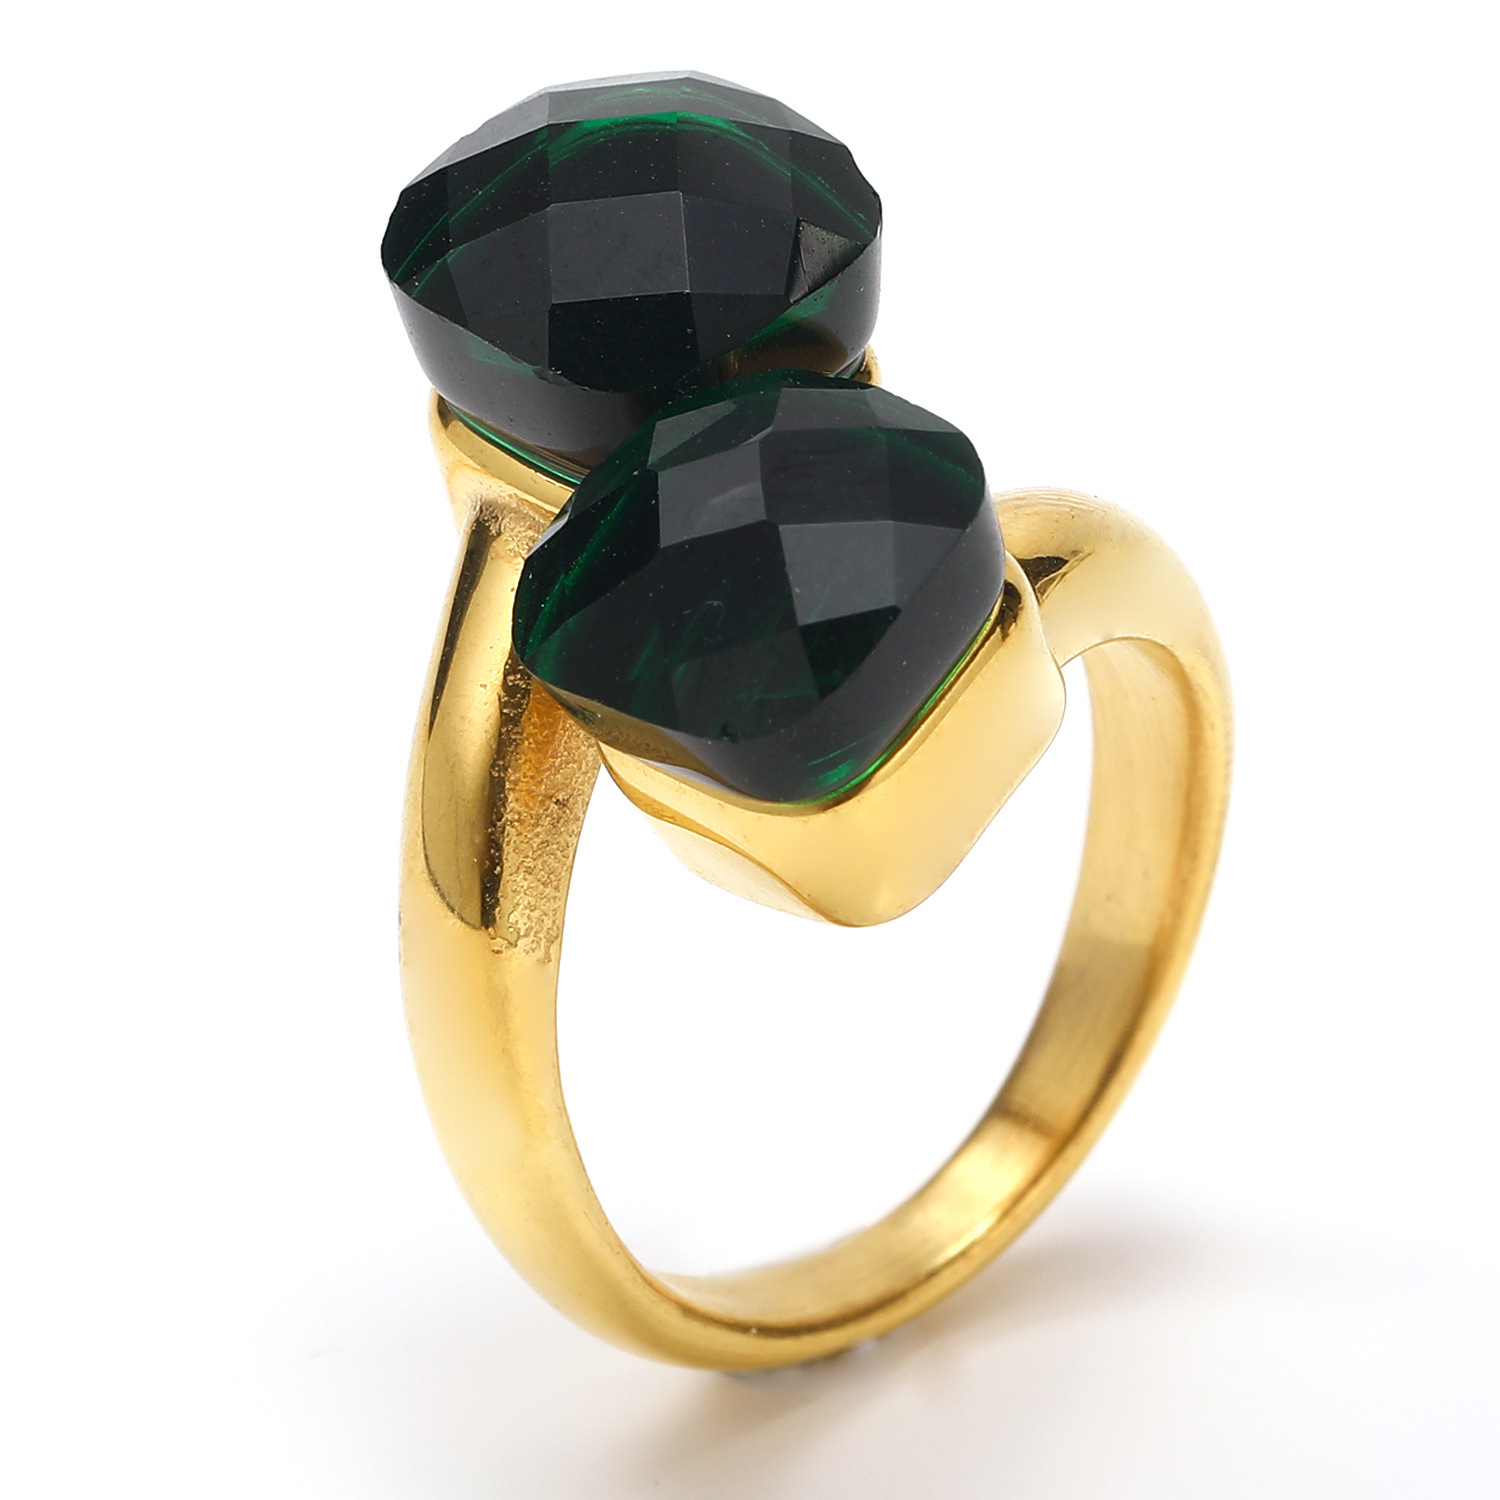 2:Gold green diamond